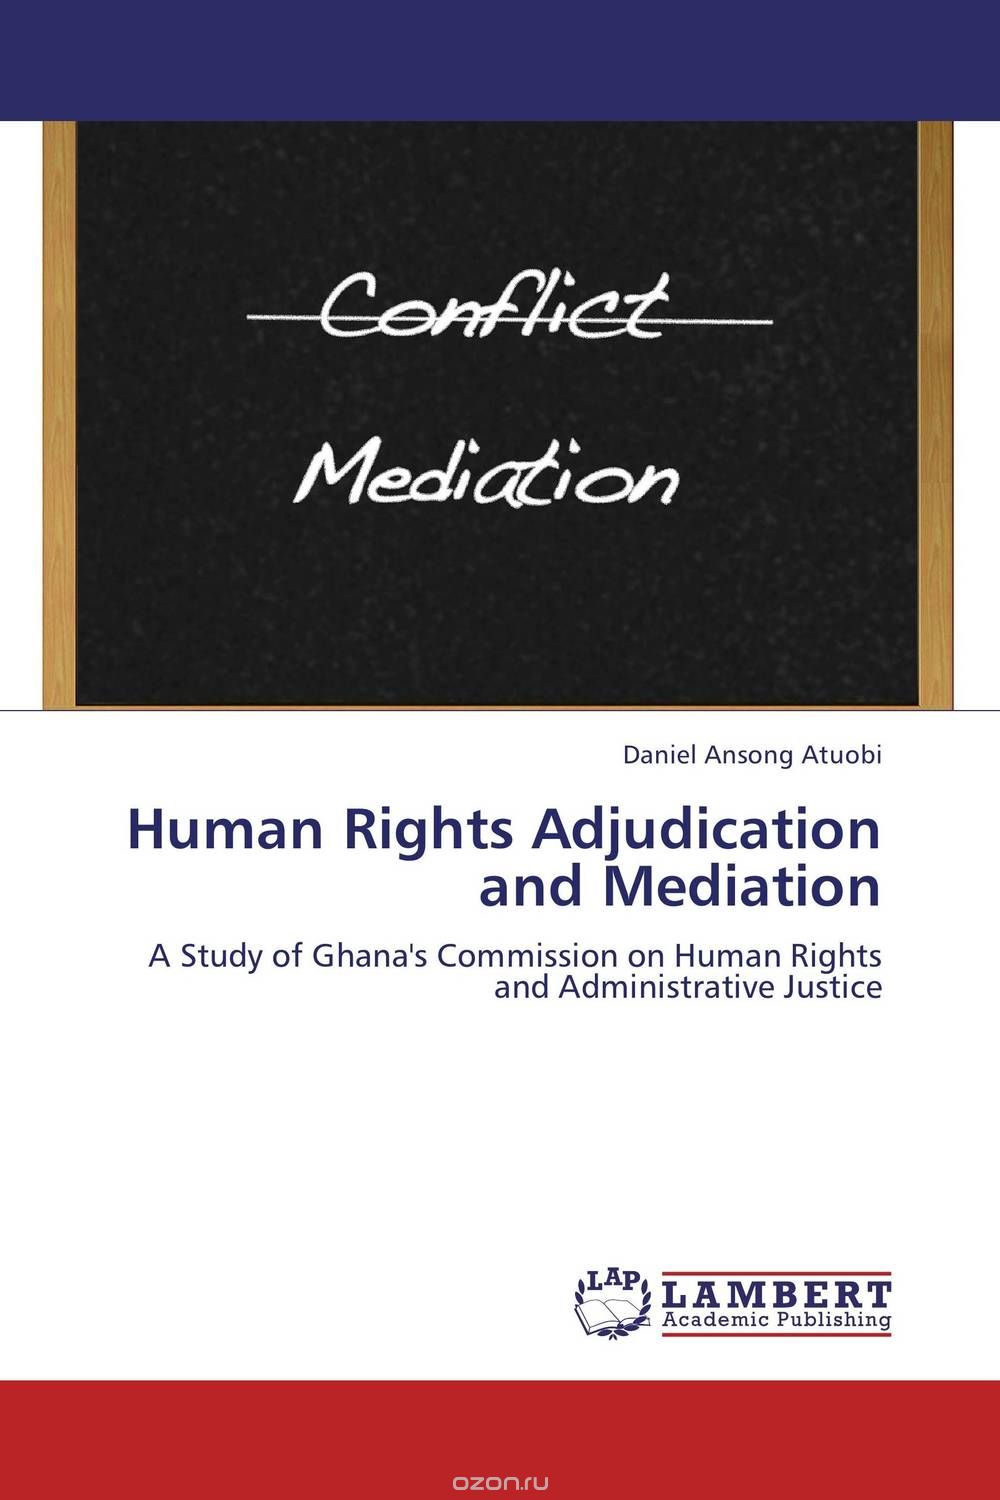 Скачать книгу "Human Rights Adjudication and Mediation"